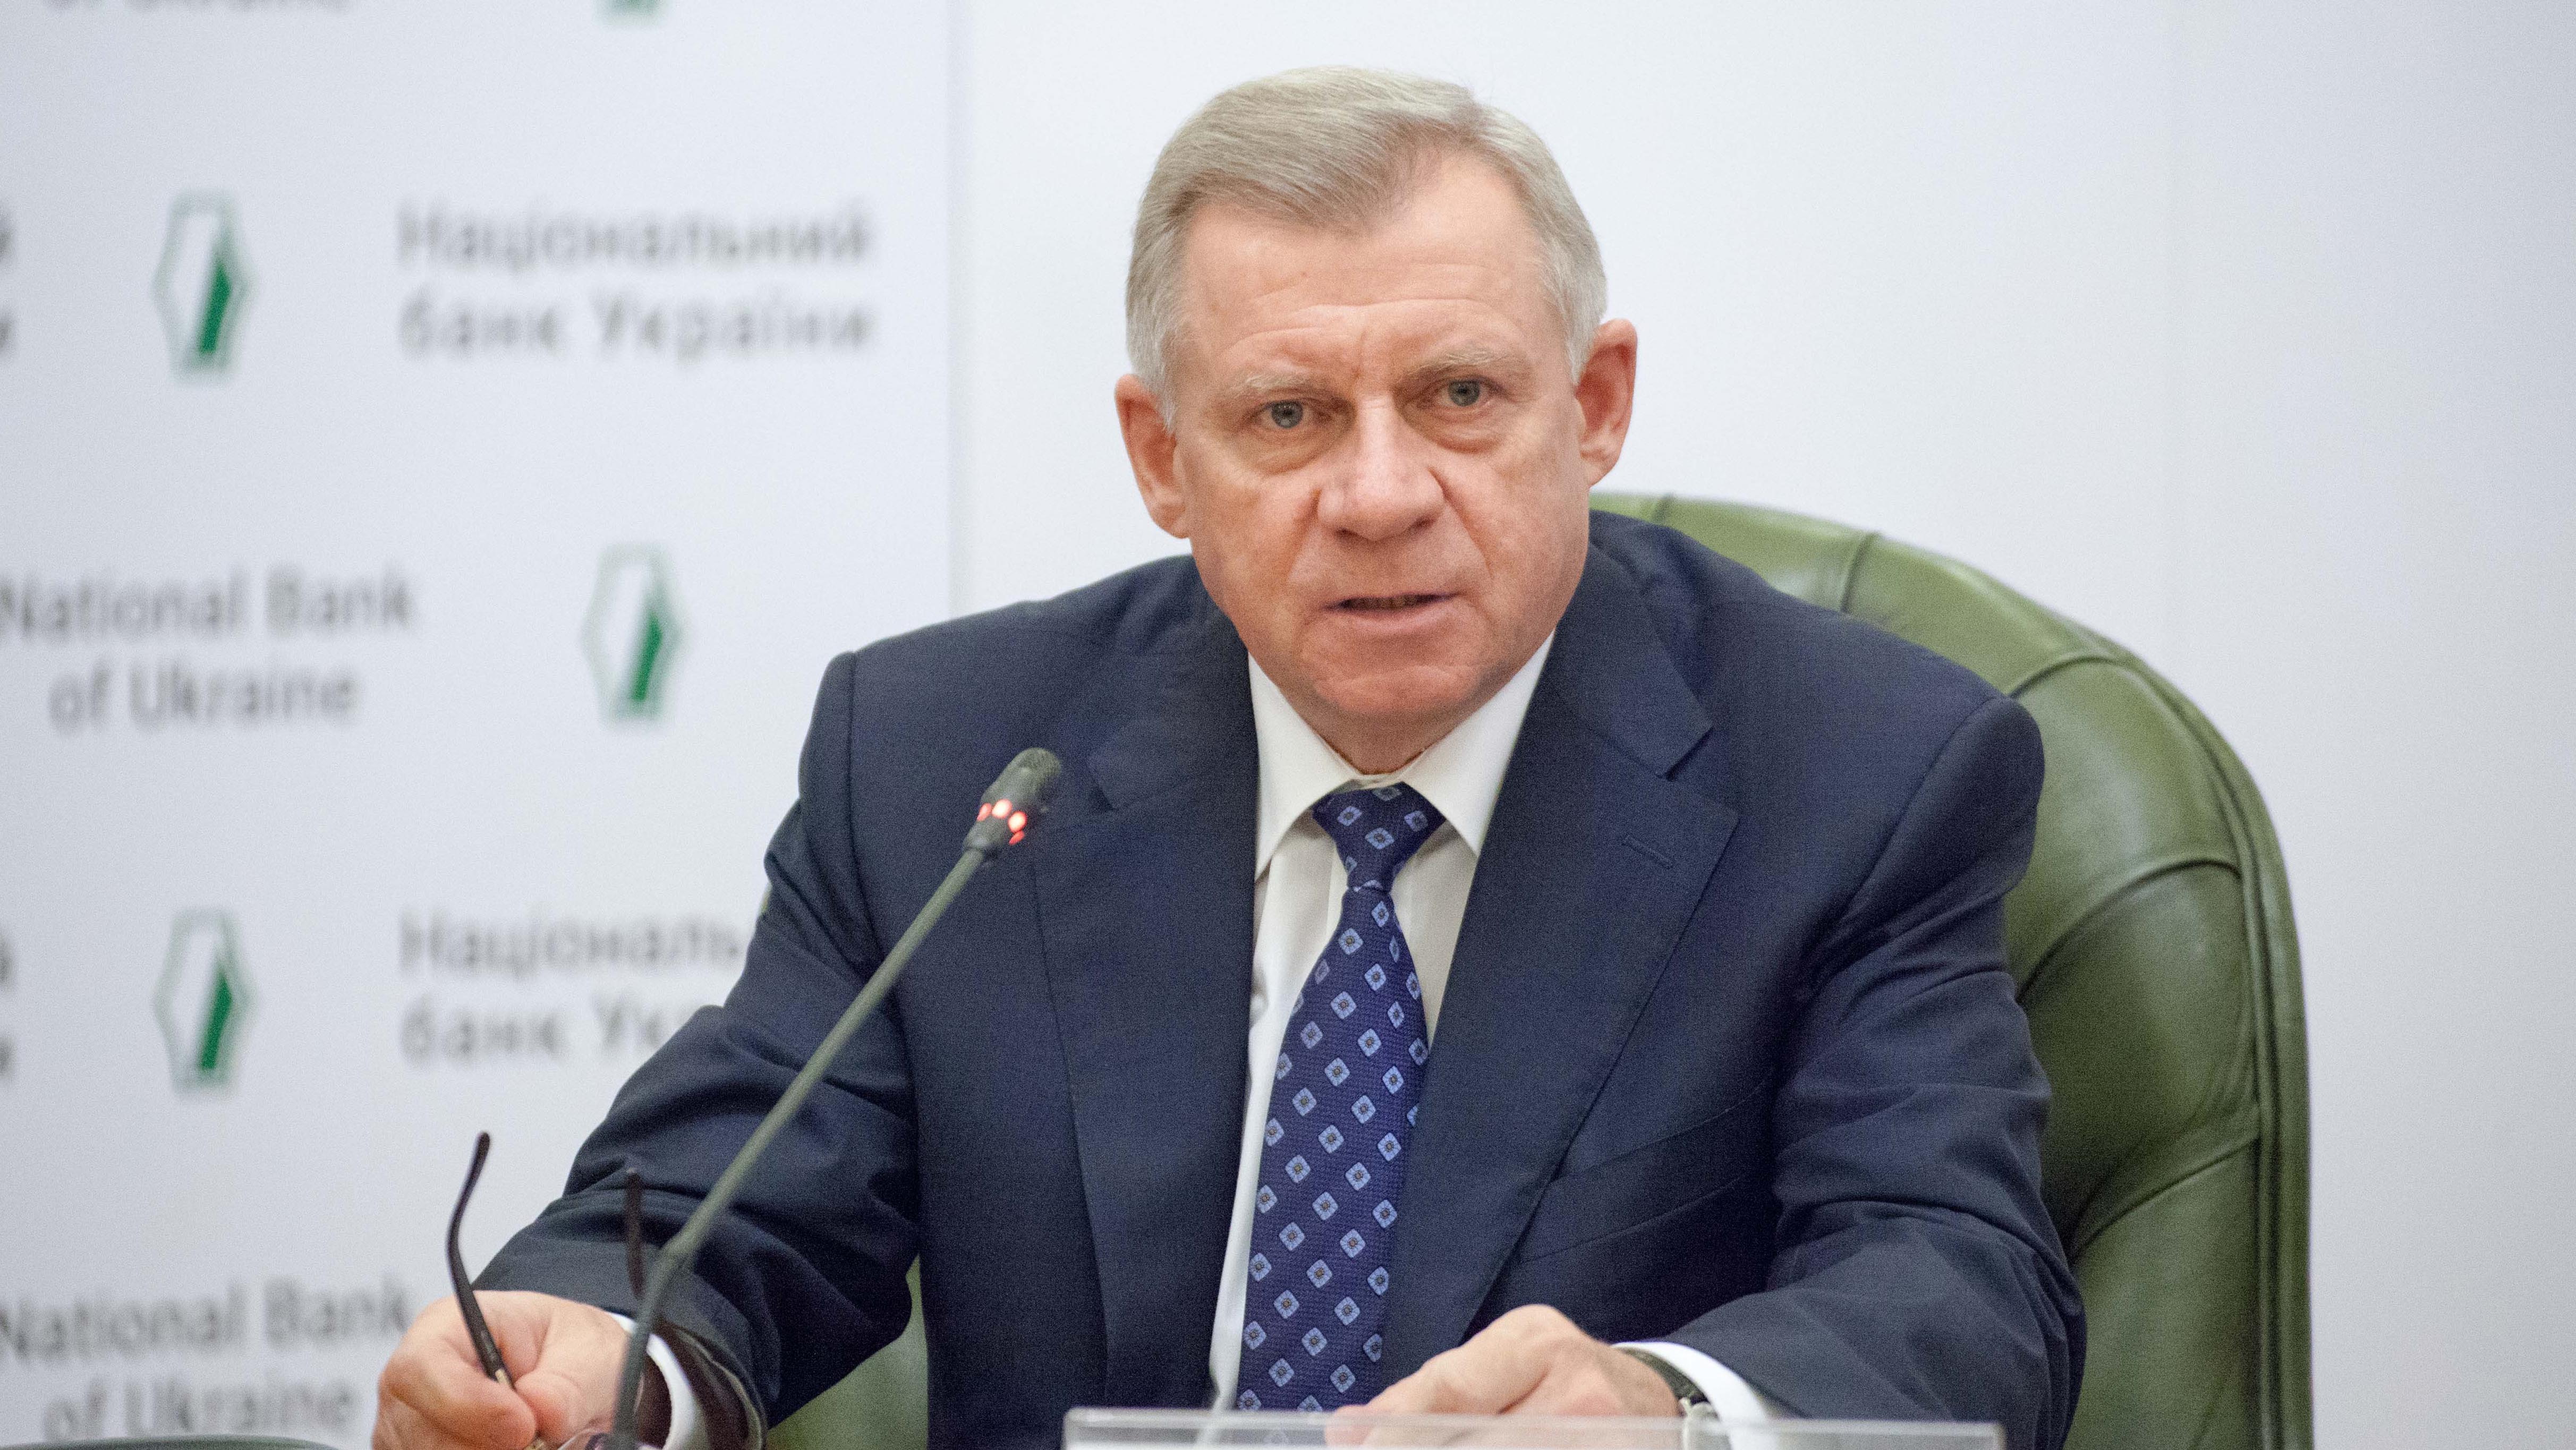 Speech by NBU Governor Yakiv Smolii at a press briefing on monetary policy